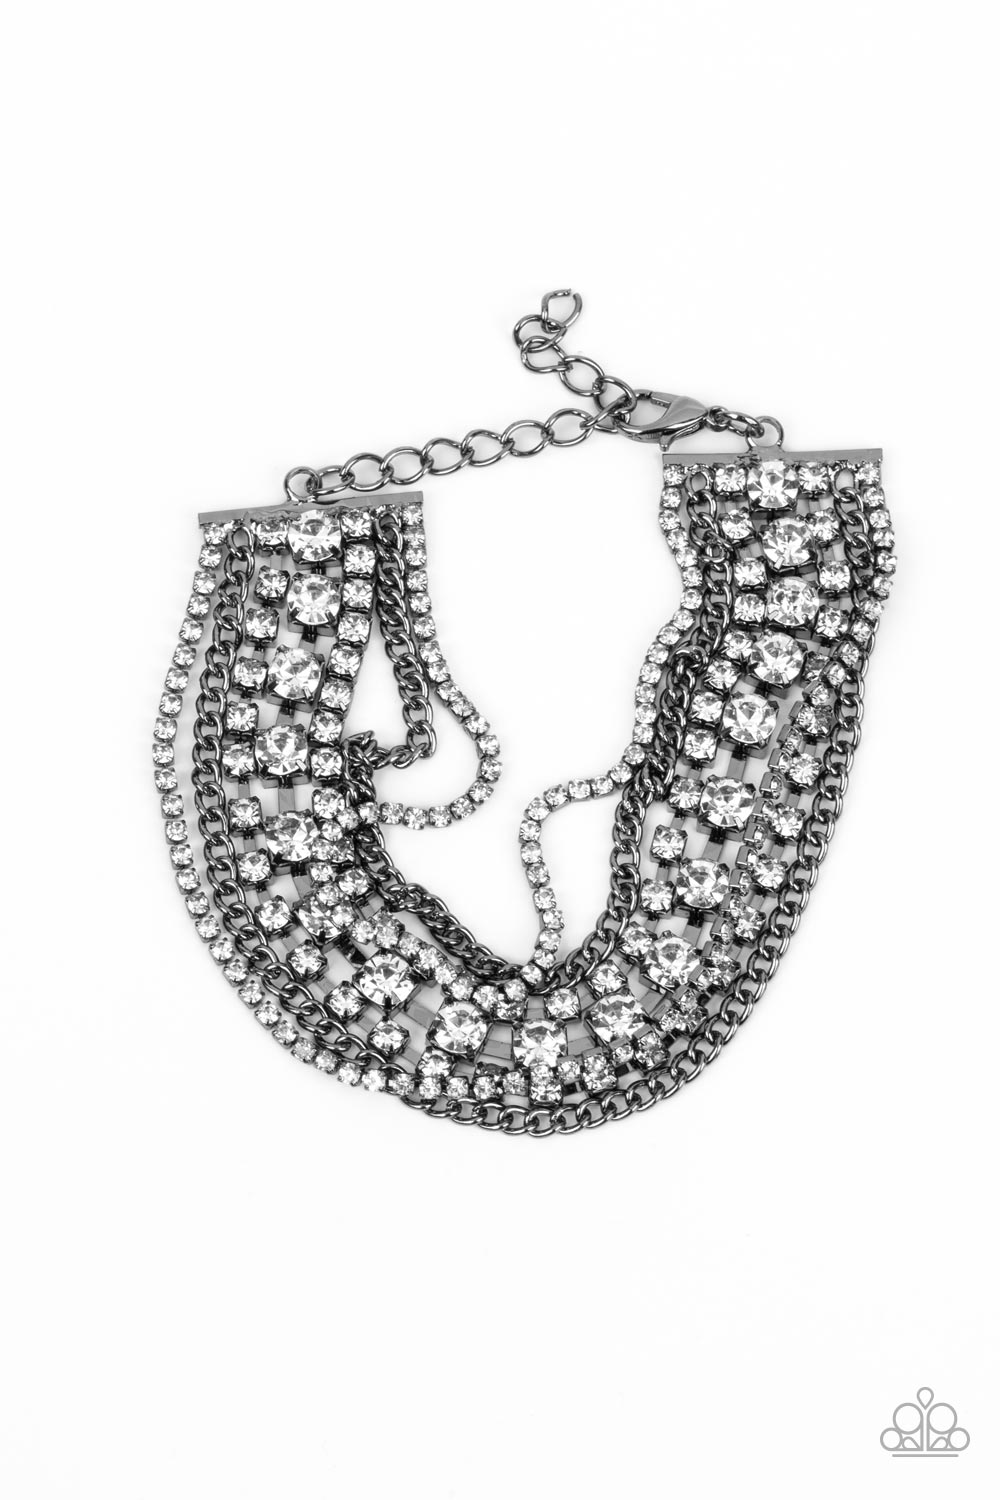 Interstellar Interlude Gunmetal Black & White Rhinestone Chain Bracelet - Paparazzi Accessories- lightbox - CarasShop.com - $5 Jewelry by Cara Jewels